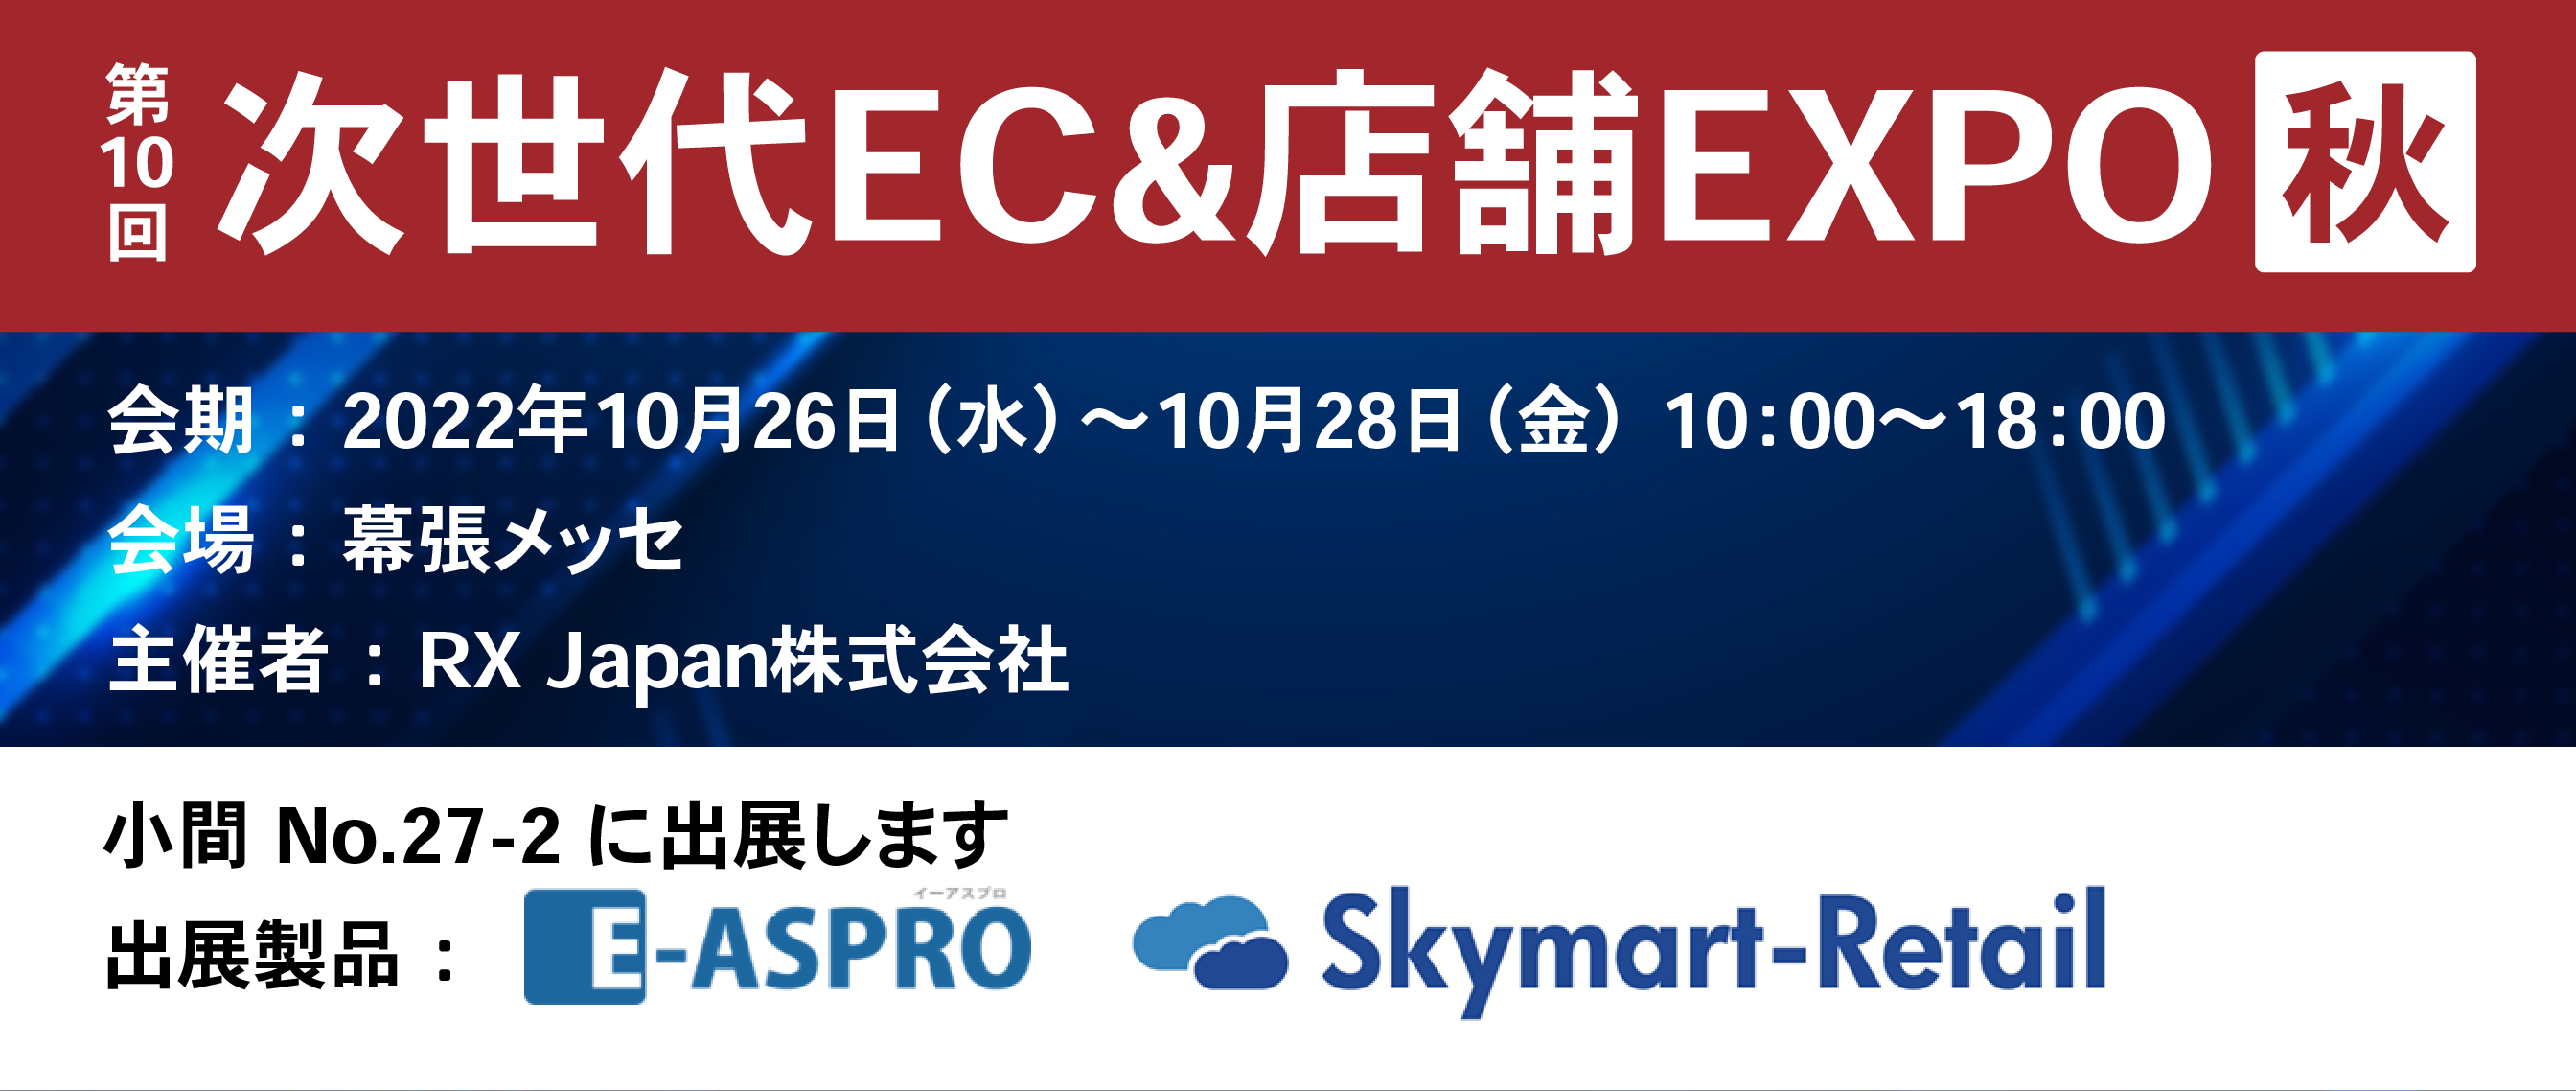 E-ASPRO（イーアスプロ）出展第9回次世代EC&店舗EXPO【秋】